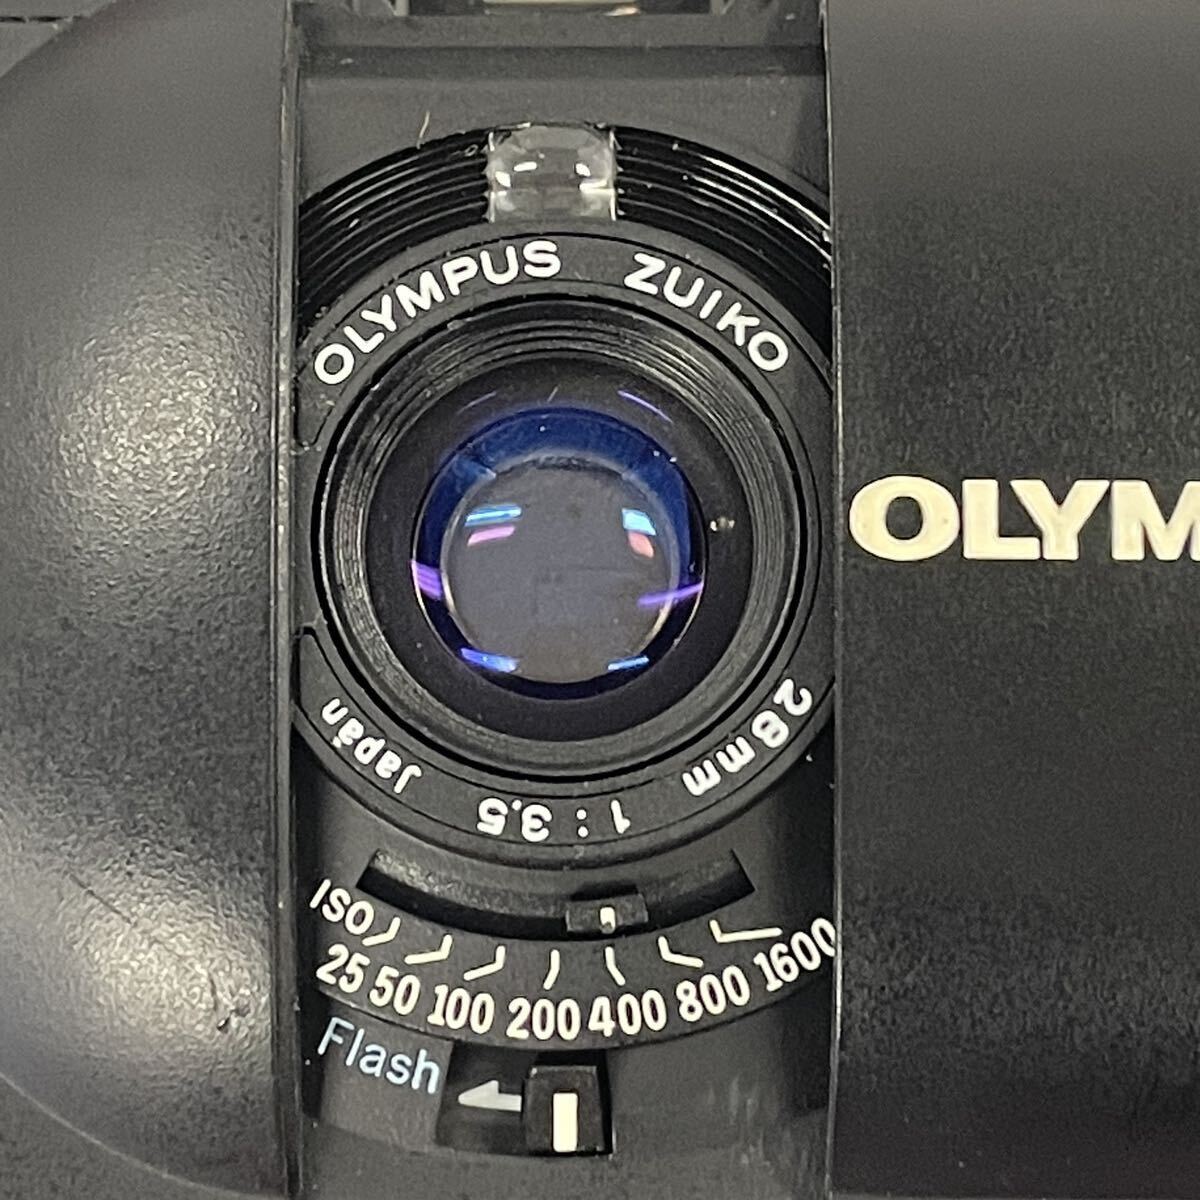 [4M51]1 jpy start OLYMPUS XA 4 MACRO A16 Olympus macro lens OLYMPUS ZUIKO 28mm 1:3.5 compact film camera 